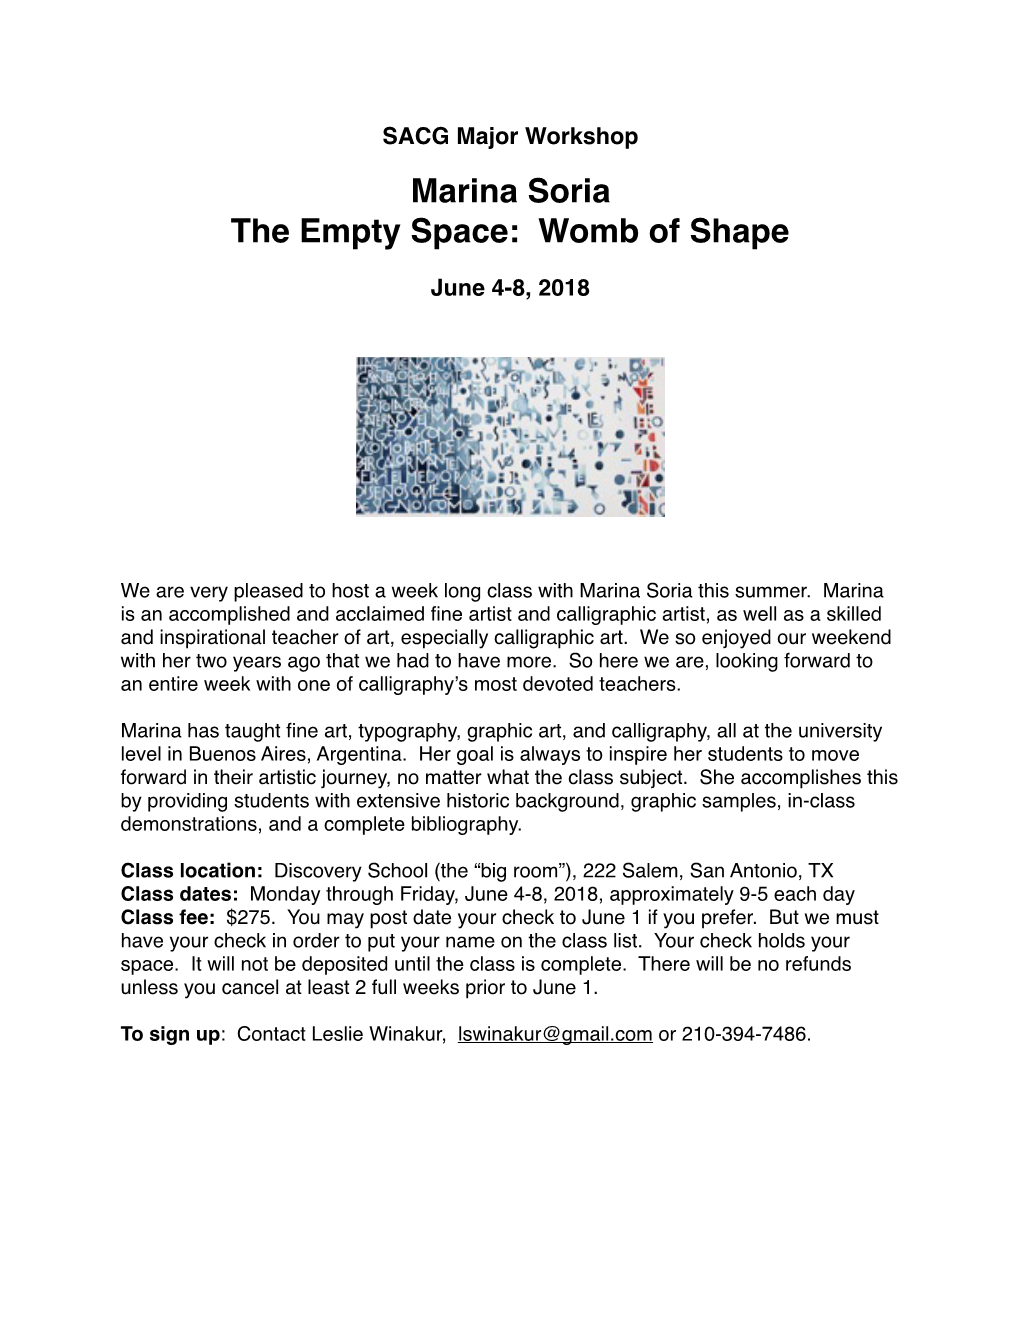 Marina Soria the Empty Space: Womb of Shape